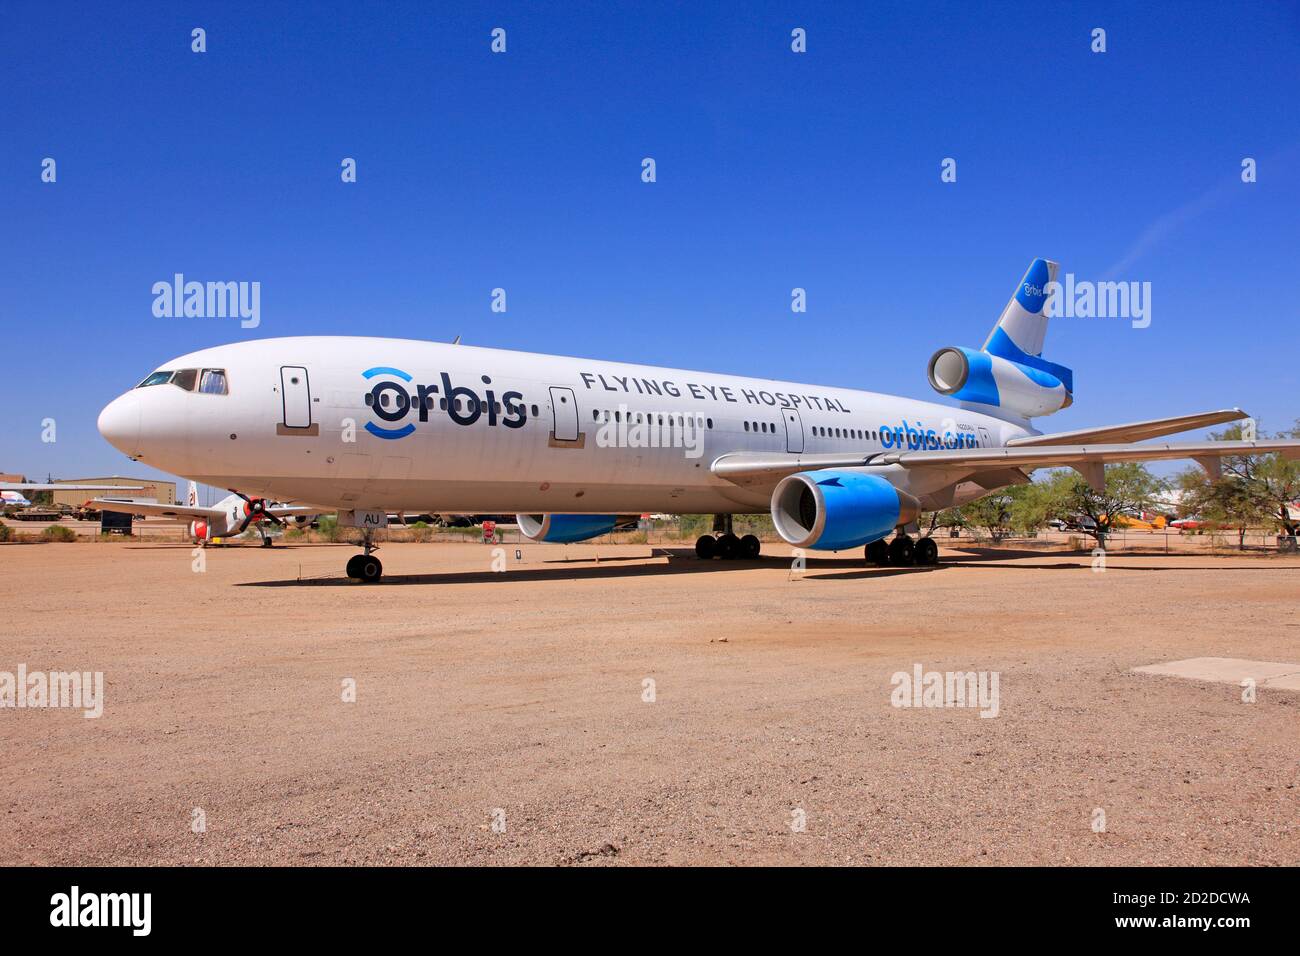 Orbis - Flying eye hospital MD DC-10 stored in Tucson AZ Stock Photo